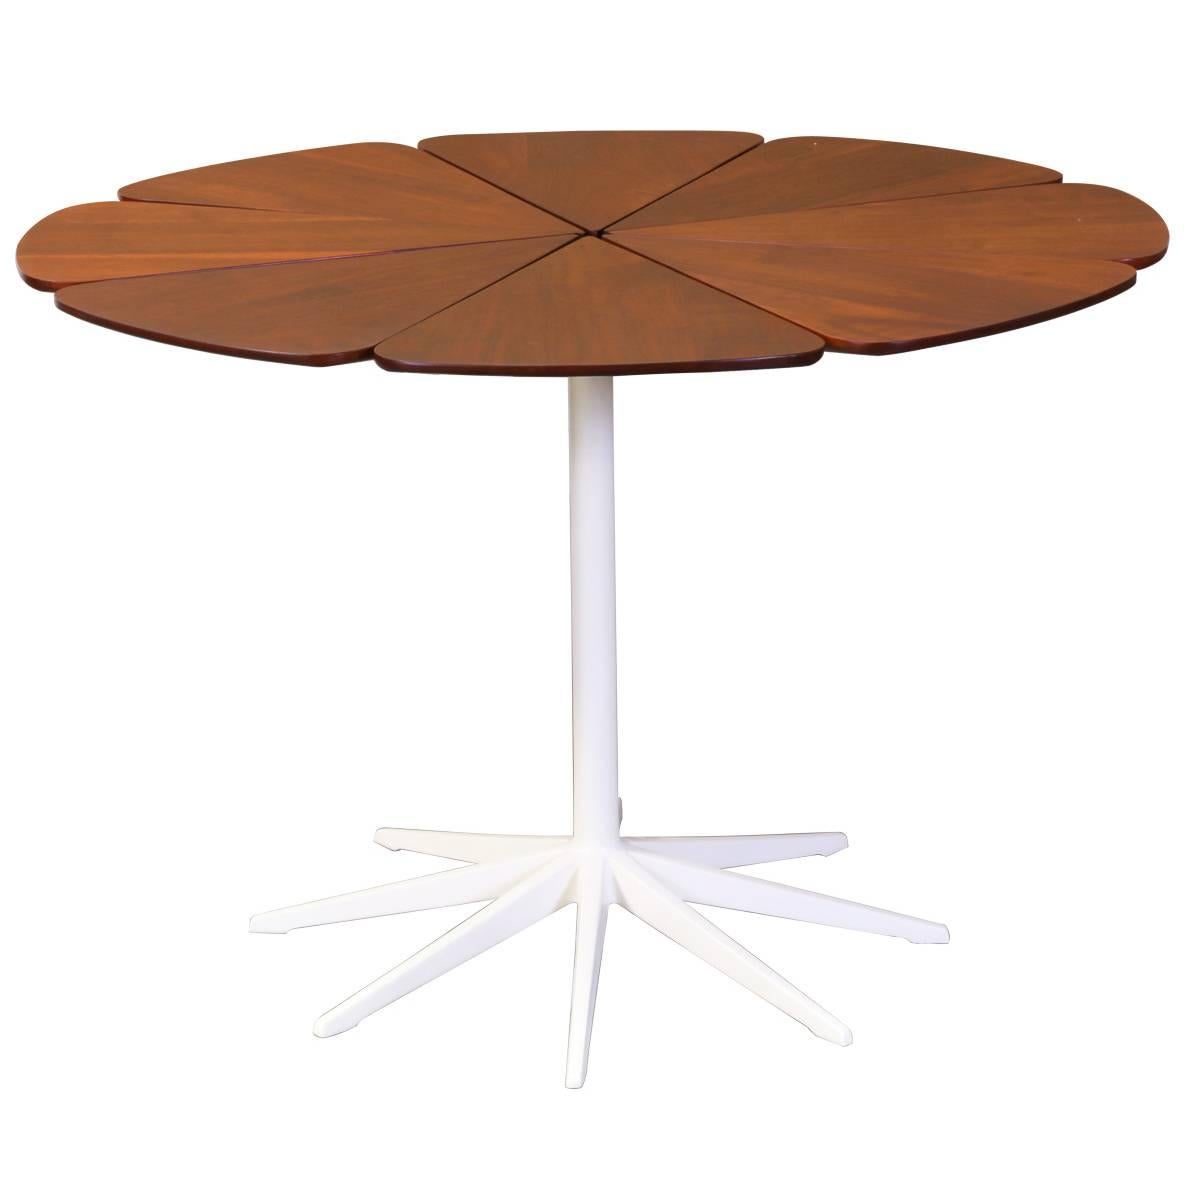 Richard Schultz “Petal” Dining Table for Knoll